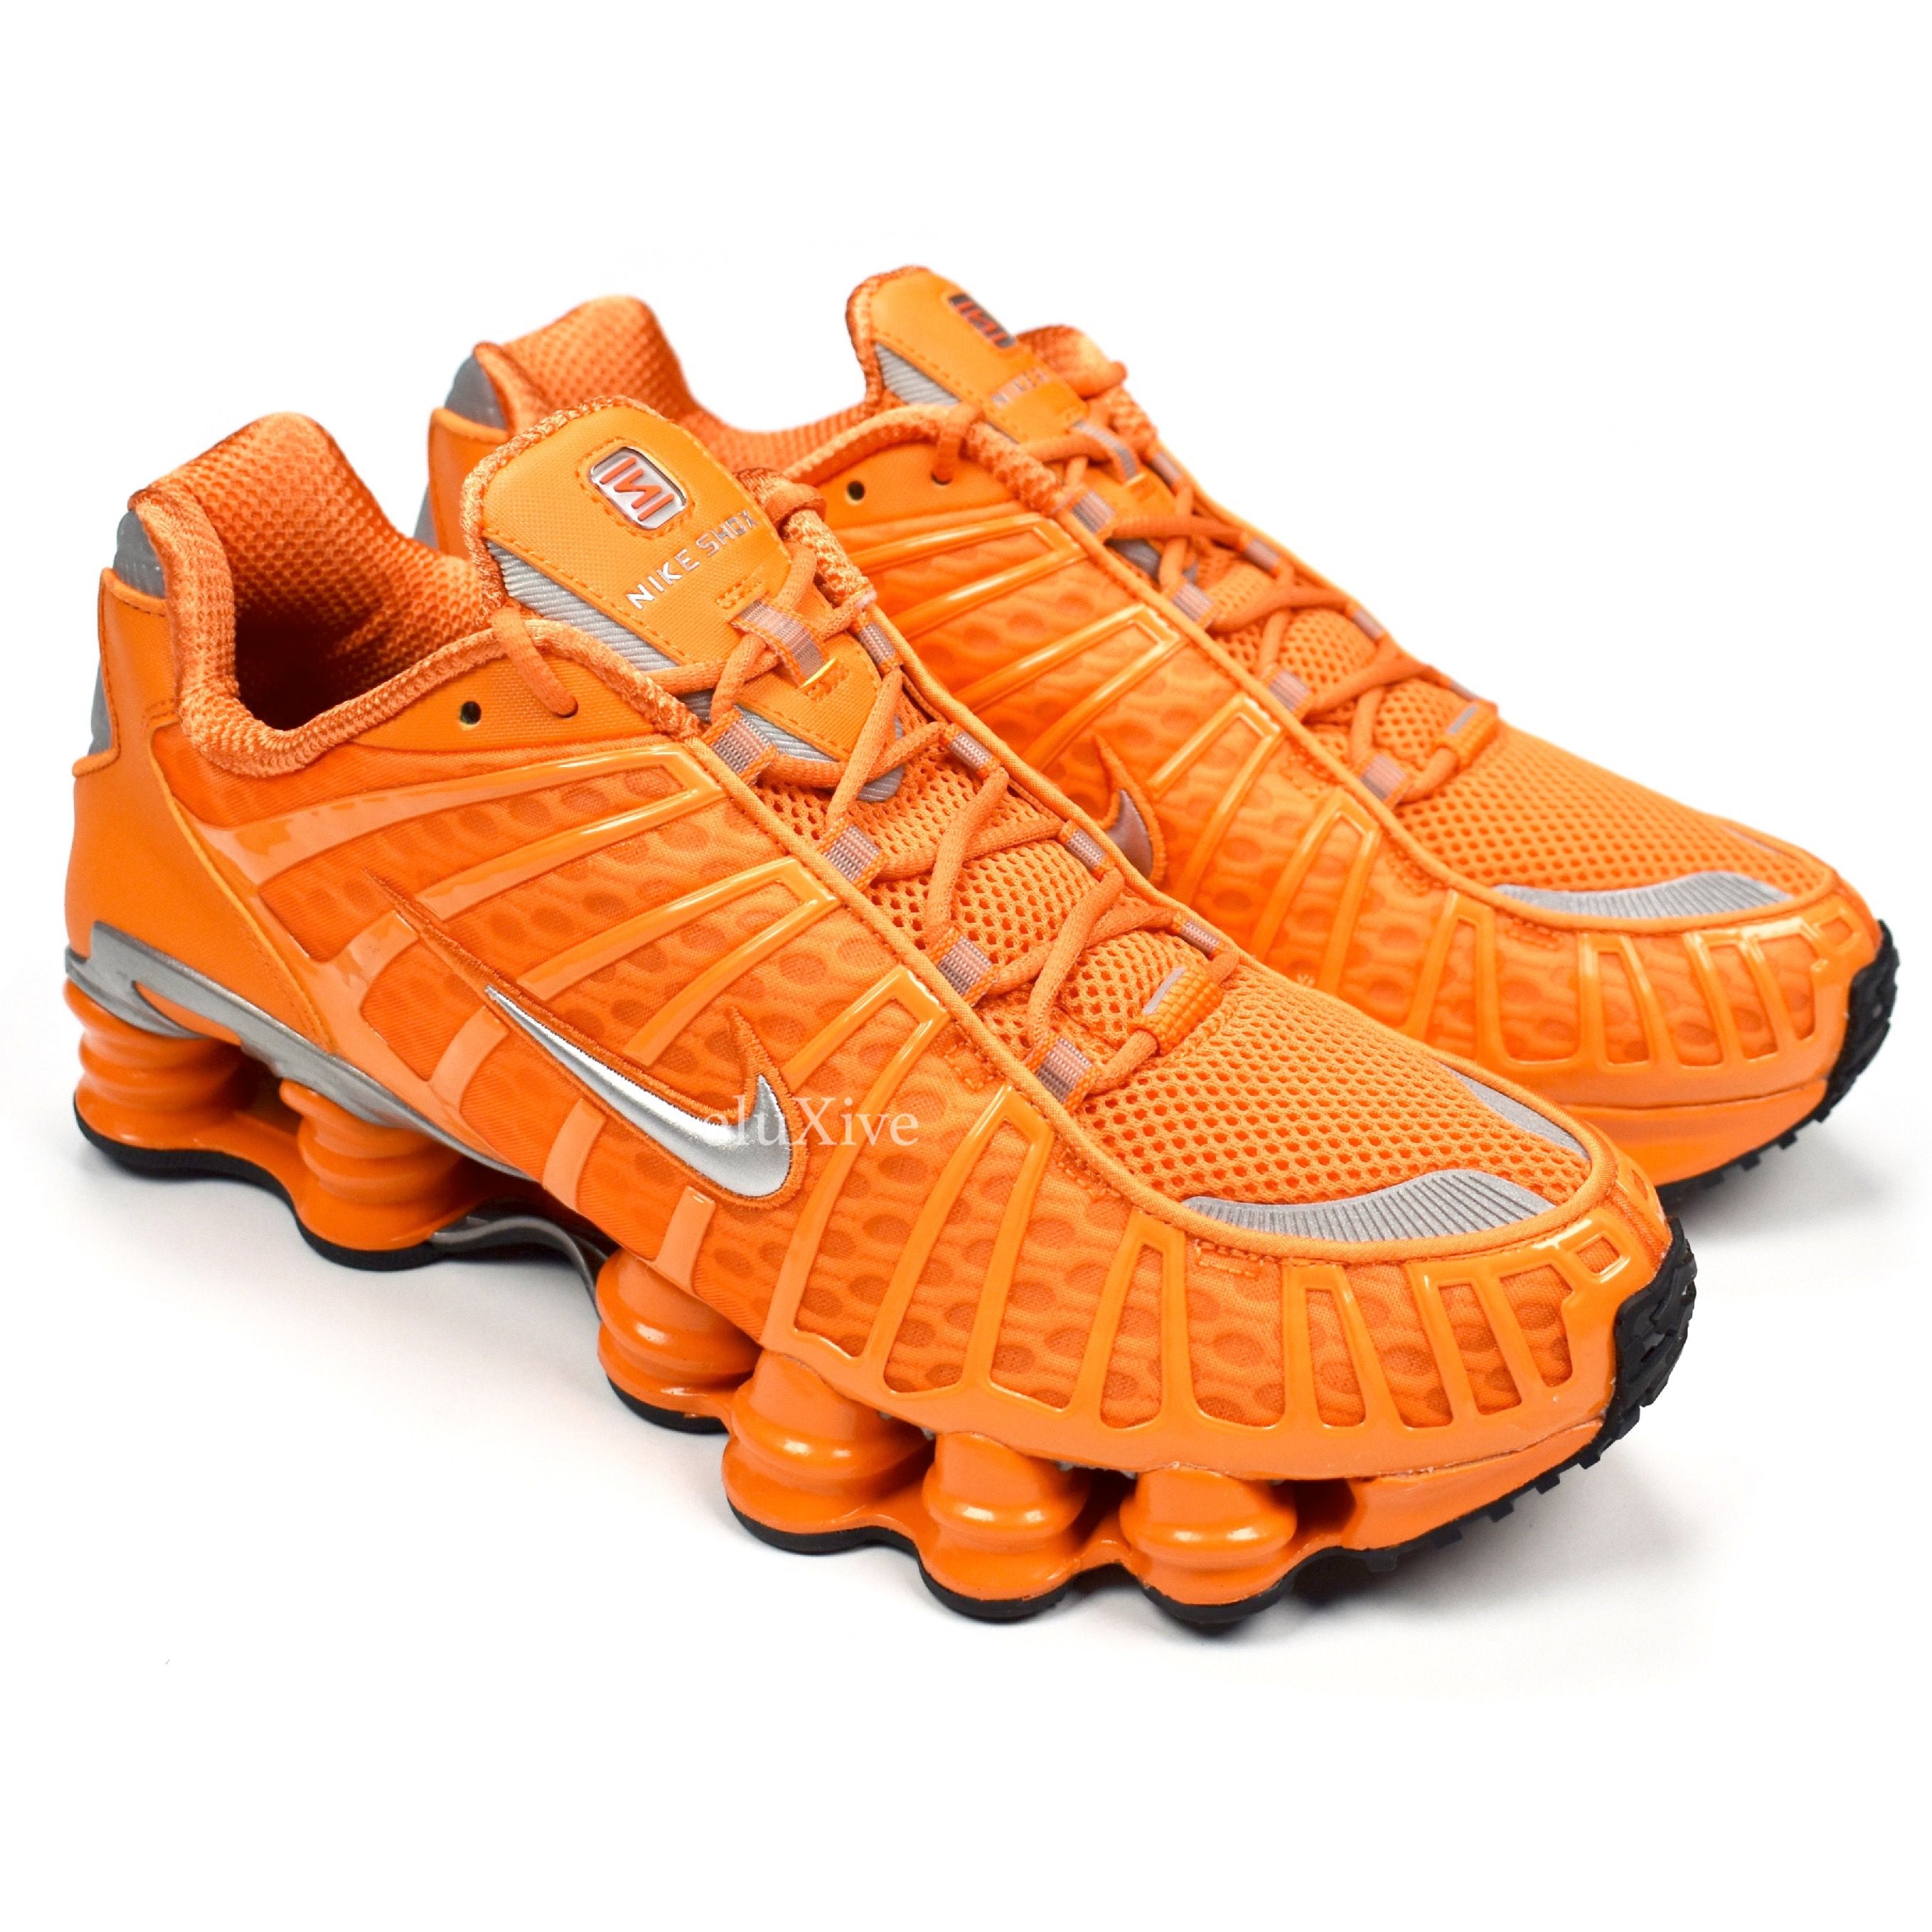 Nike Shox TL Total Orange